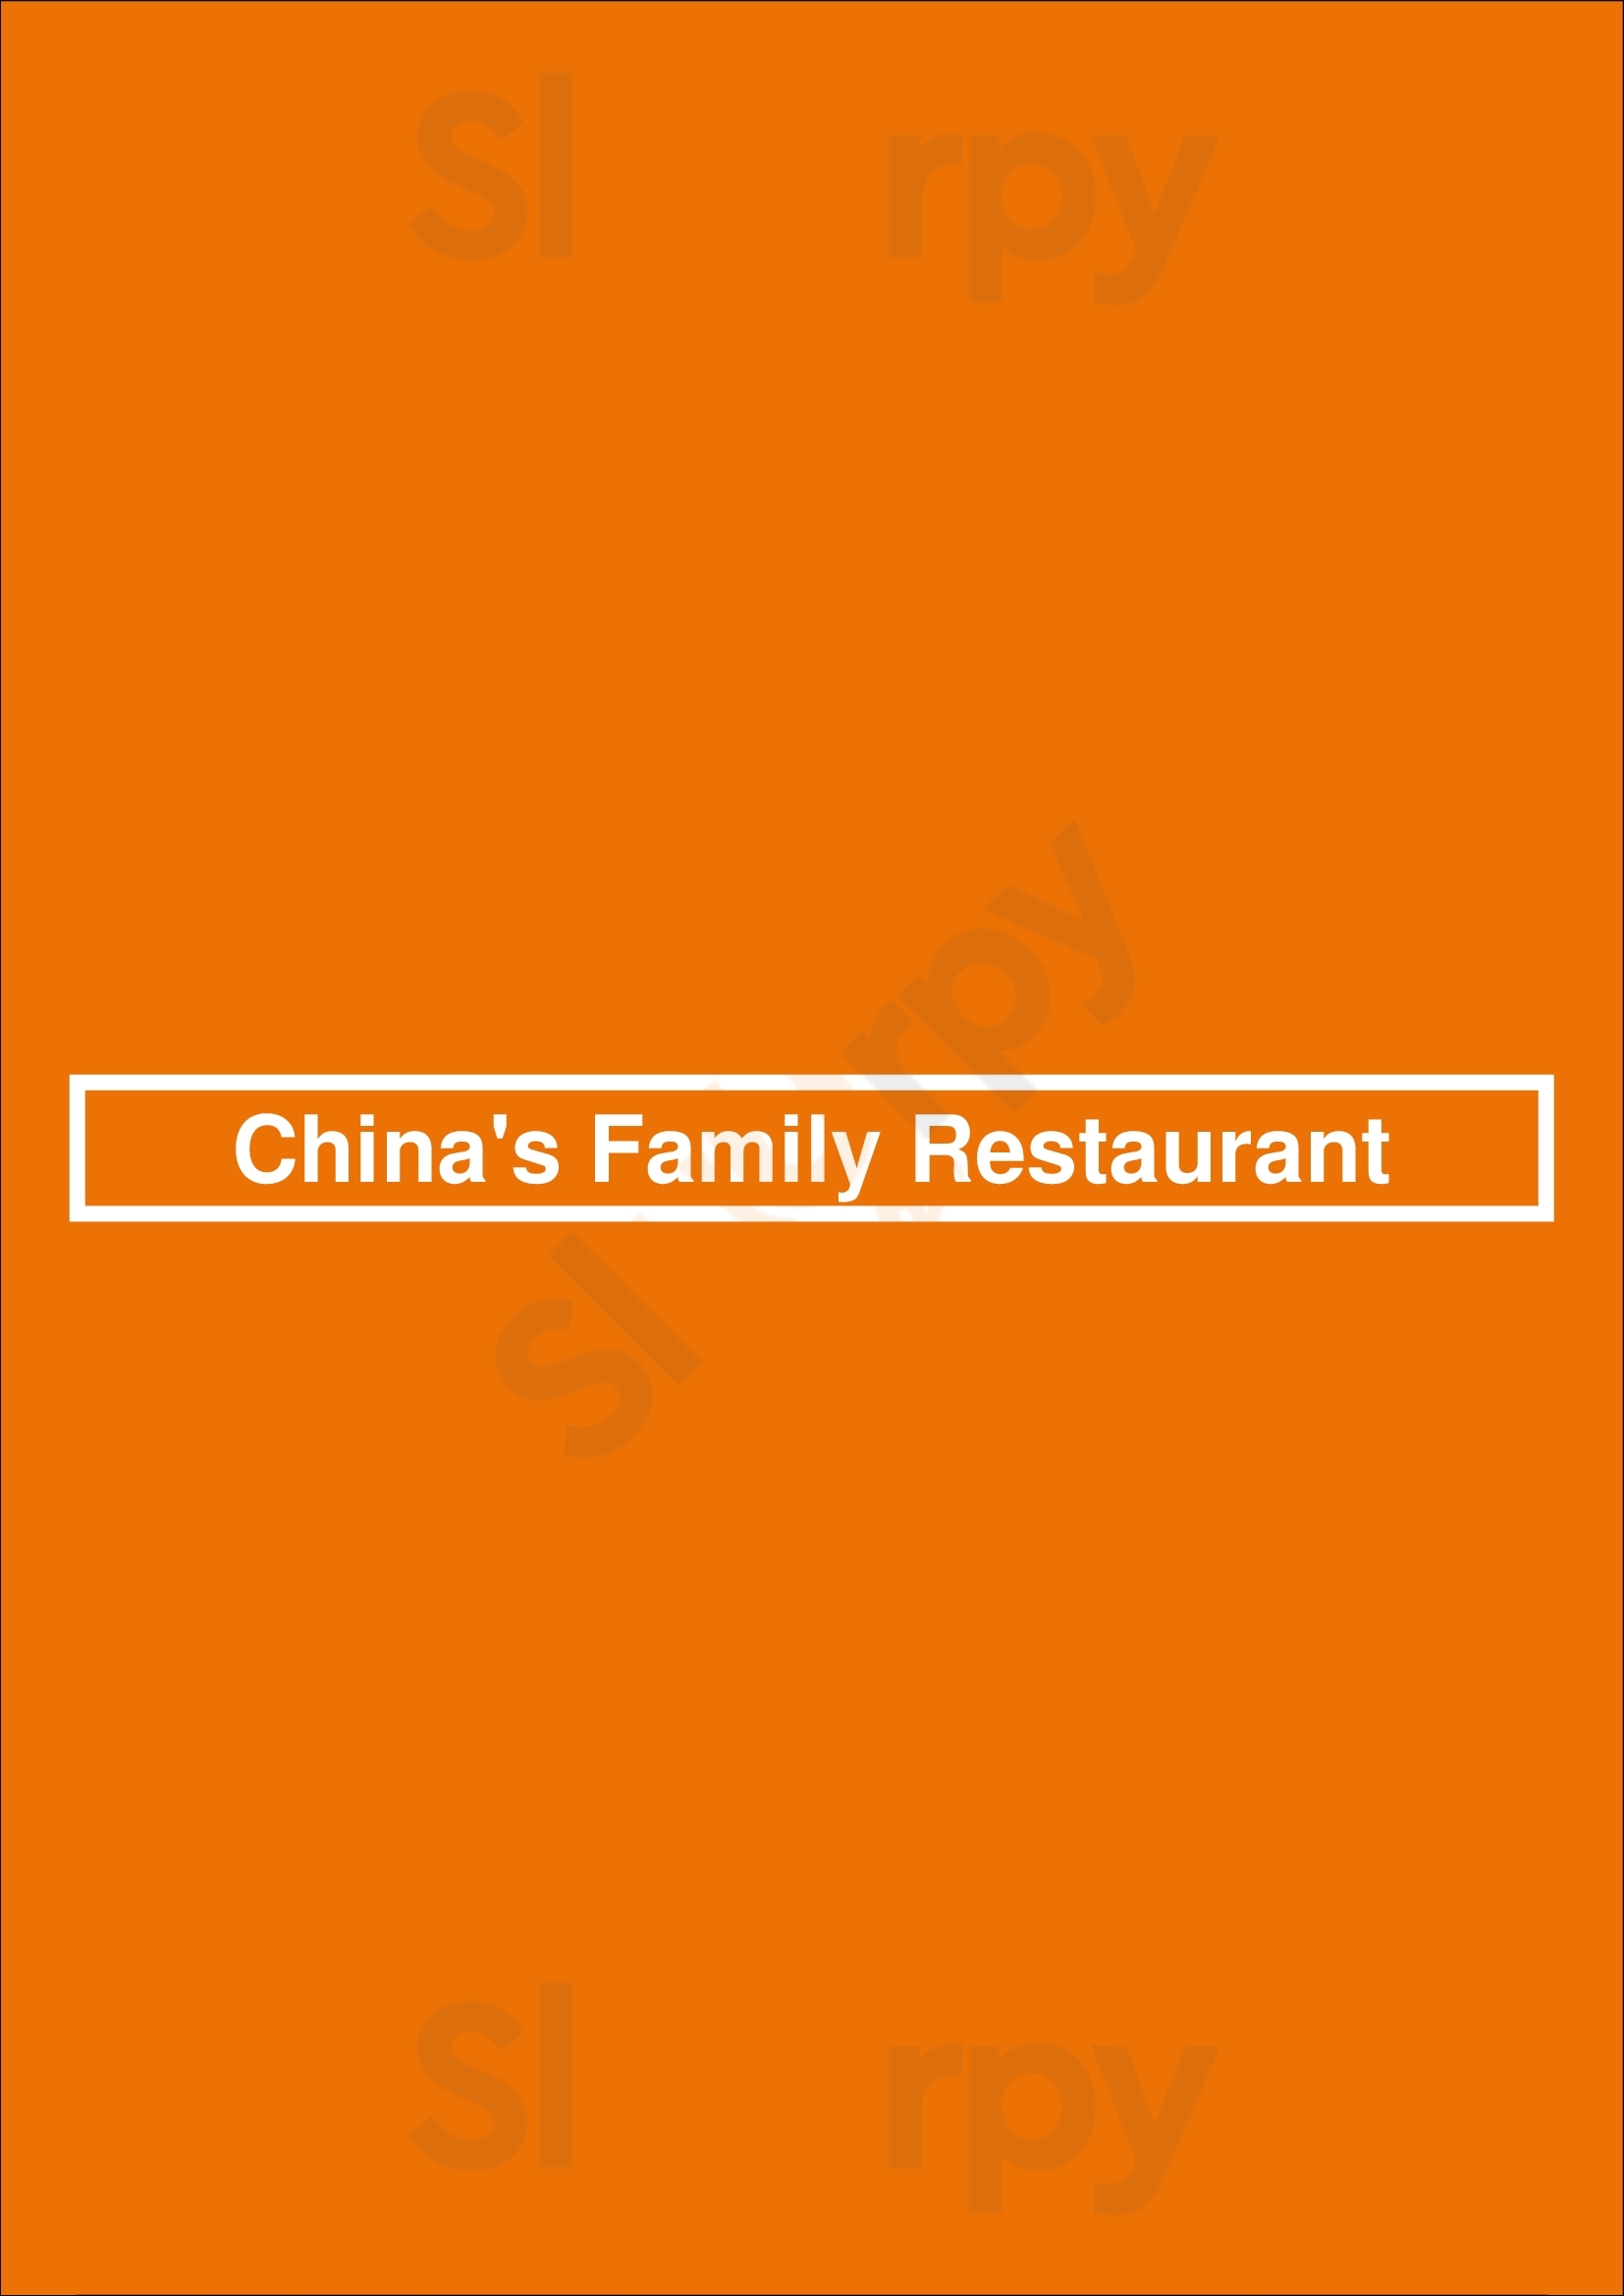 China's Family Restaurant Austin Menu - 1